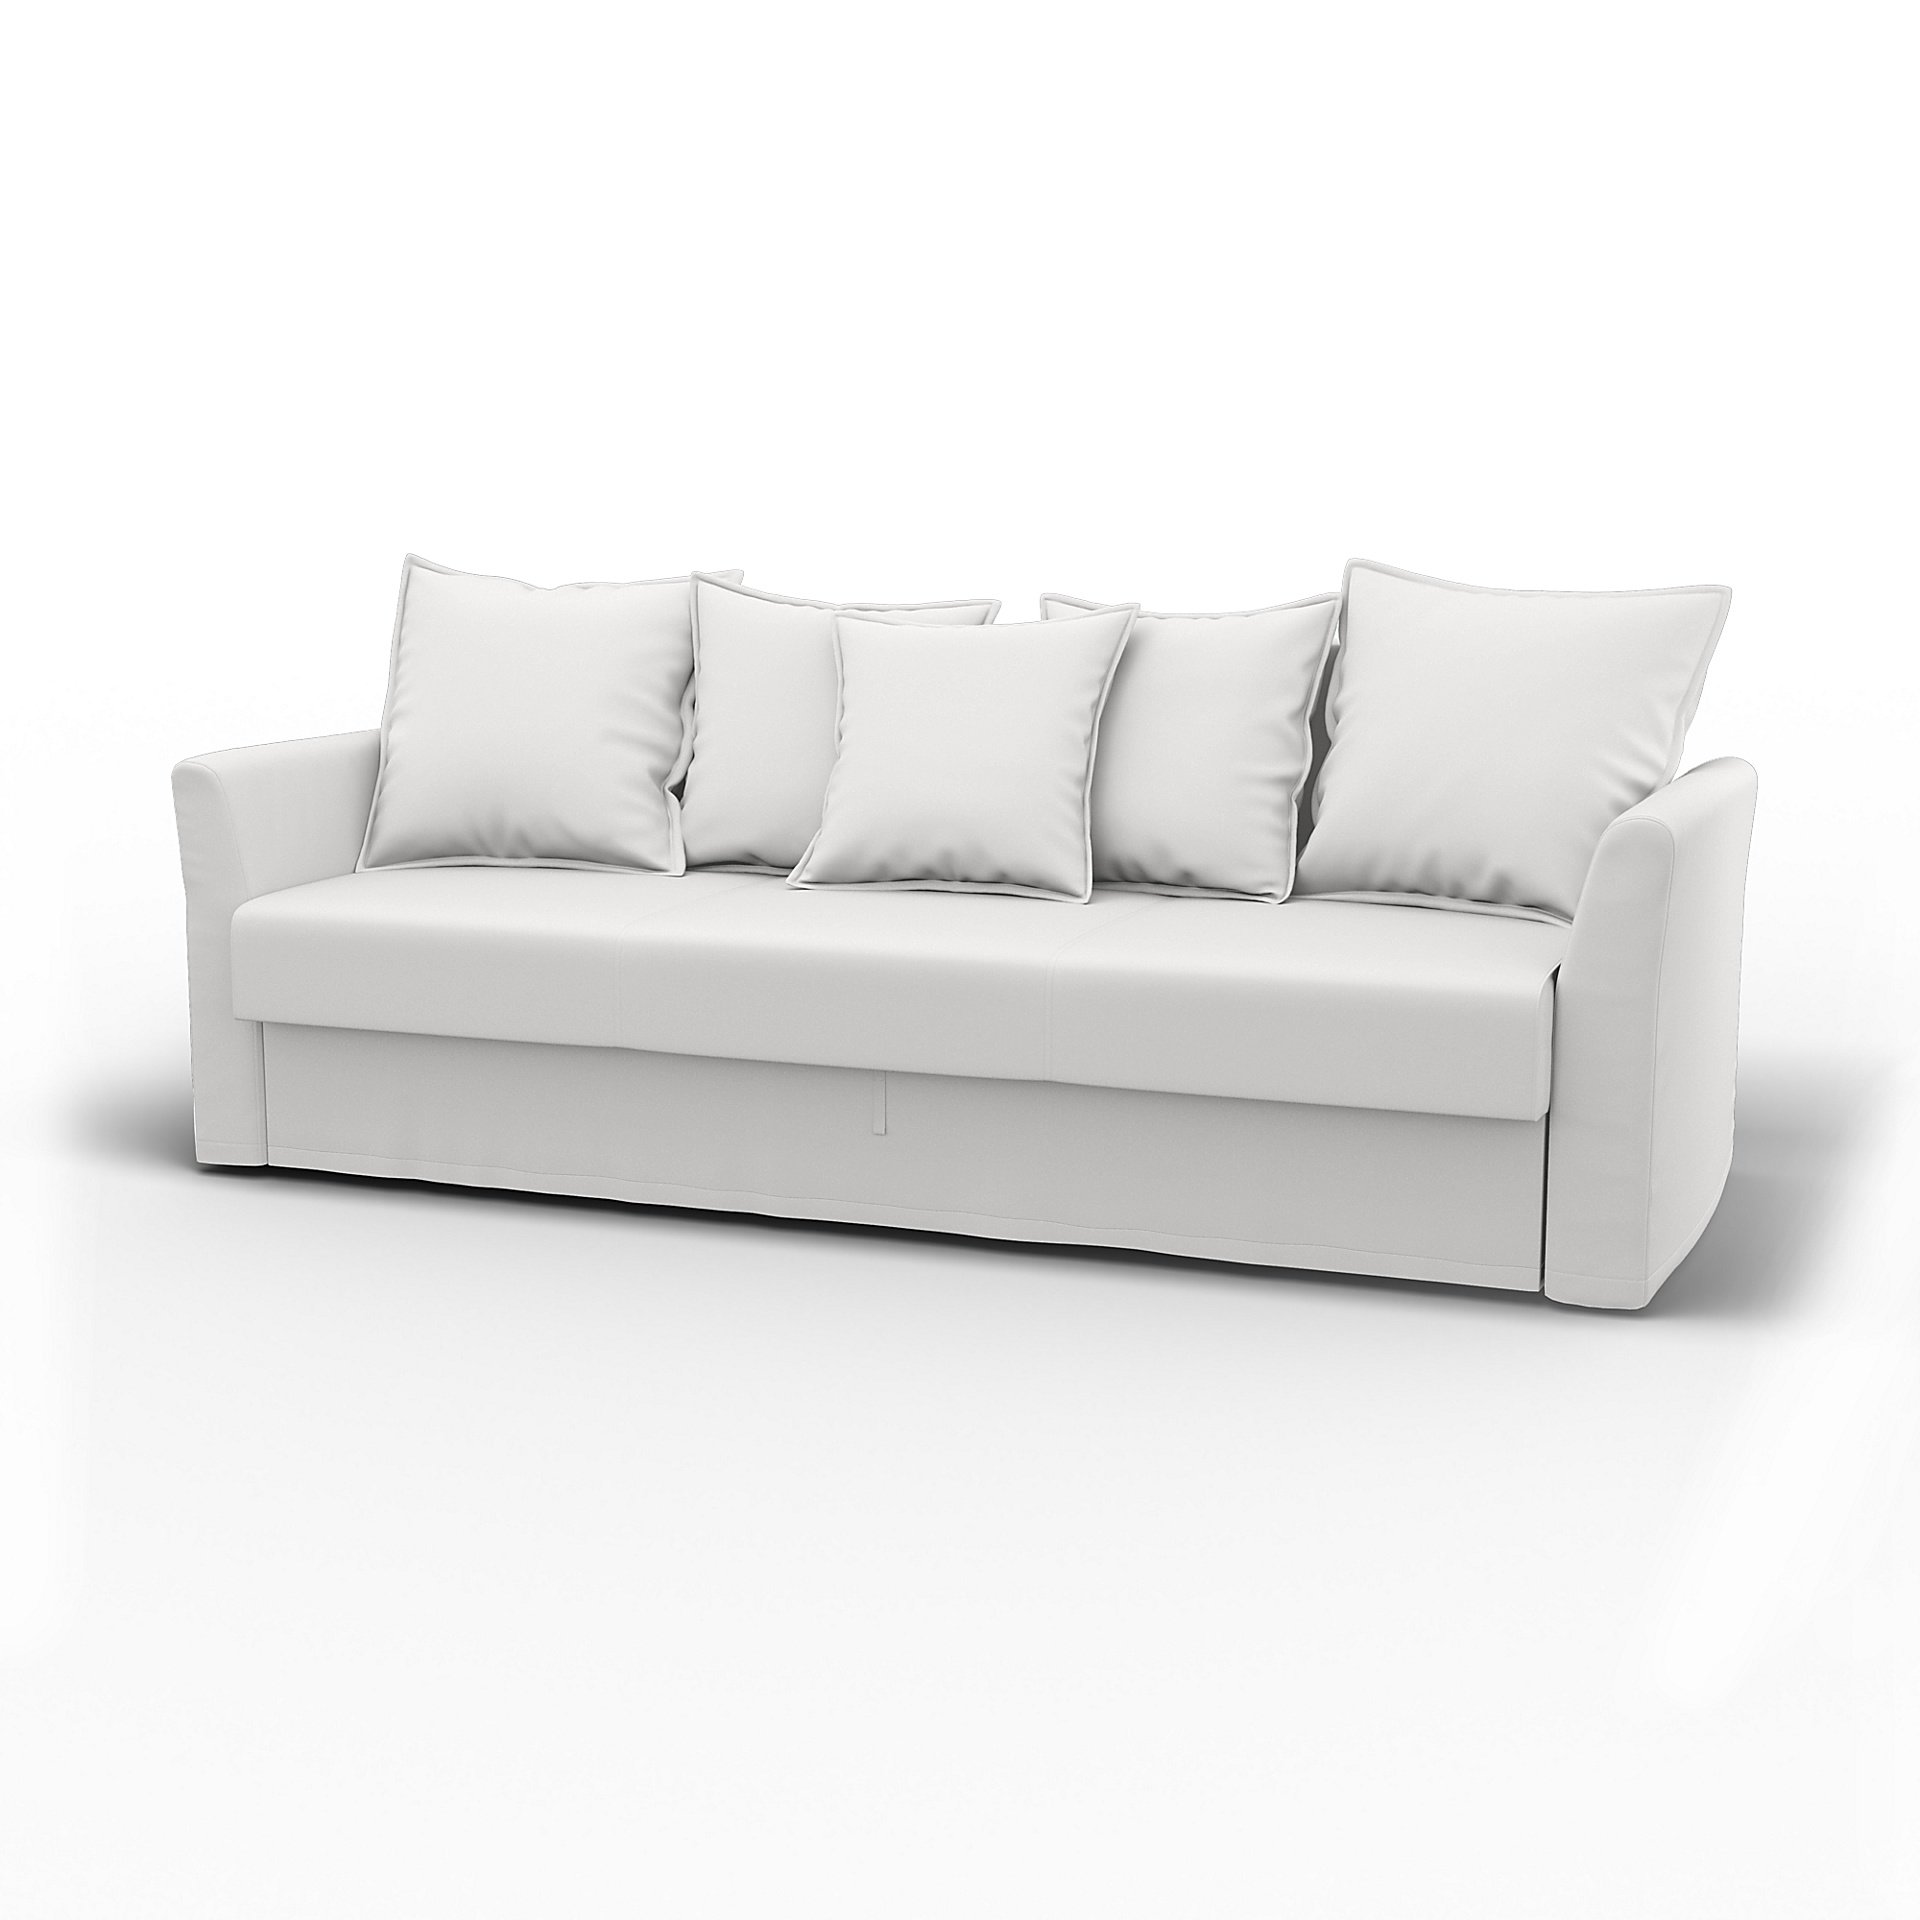 IKEA - Holmsund Sofabed, Absolute White, Cotton - Bemz